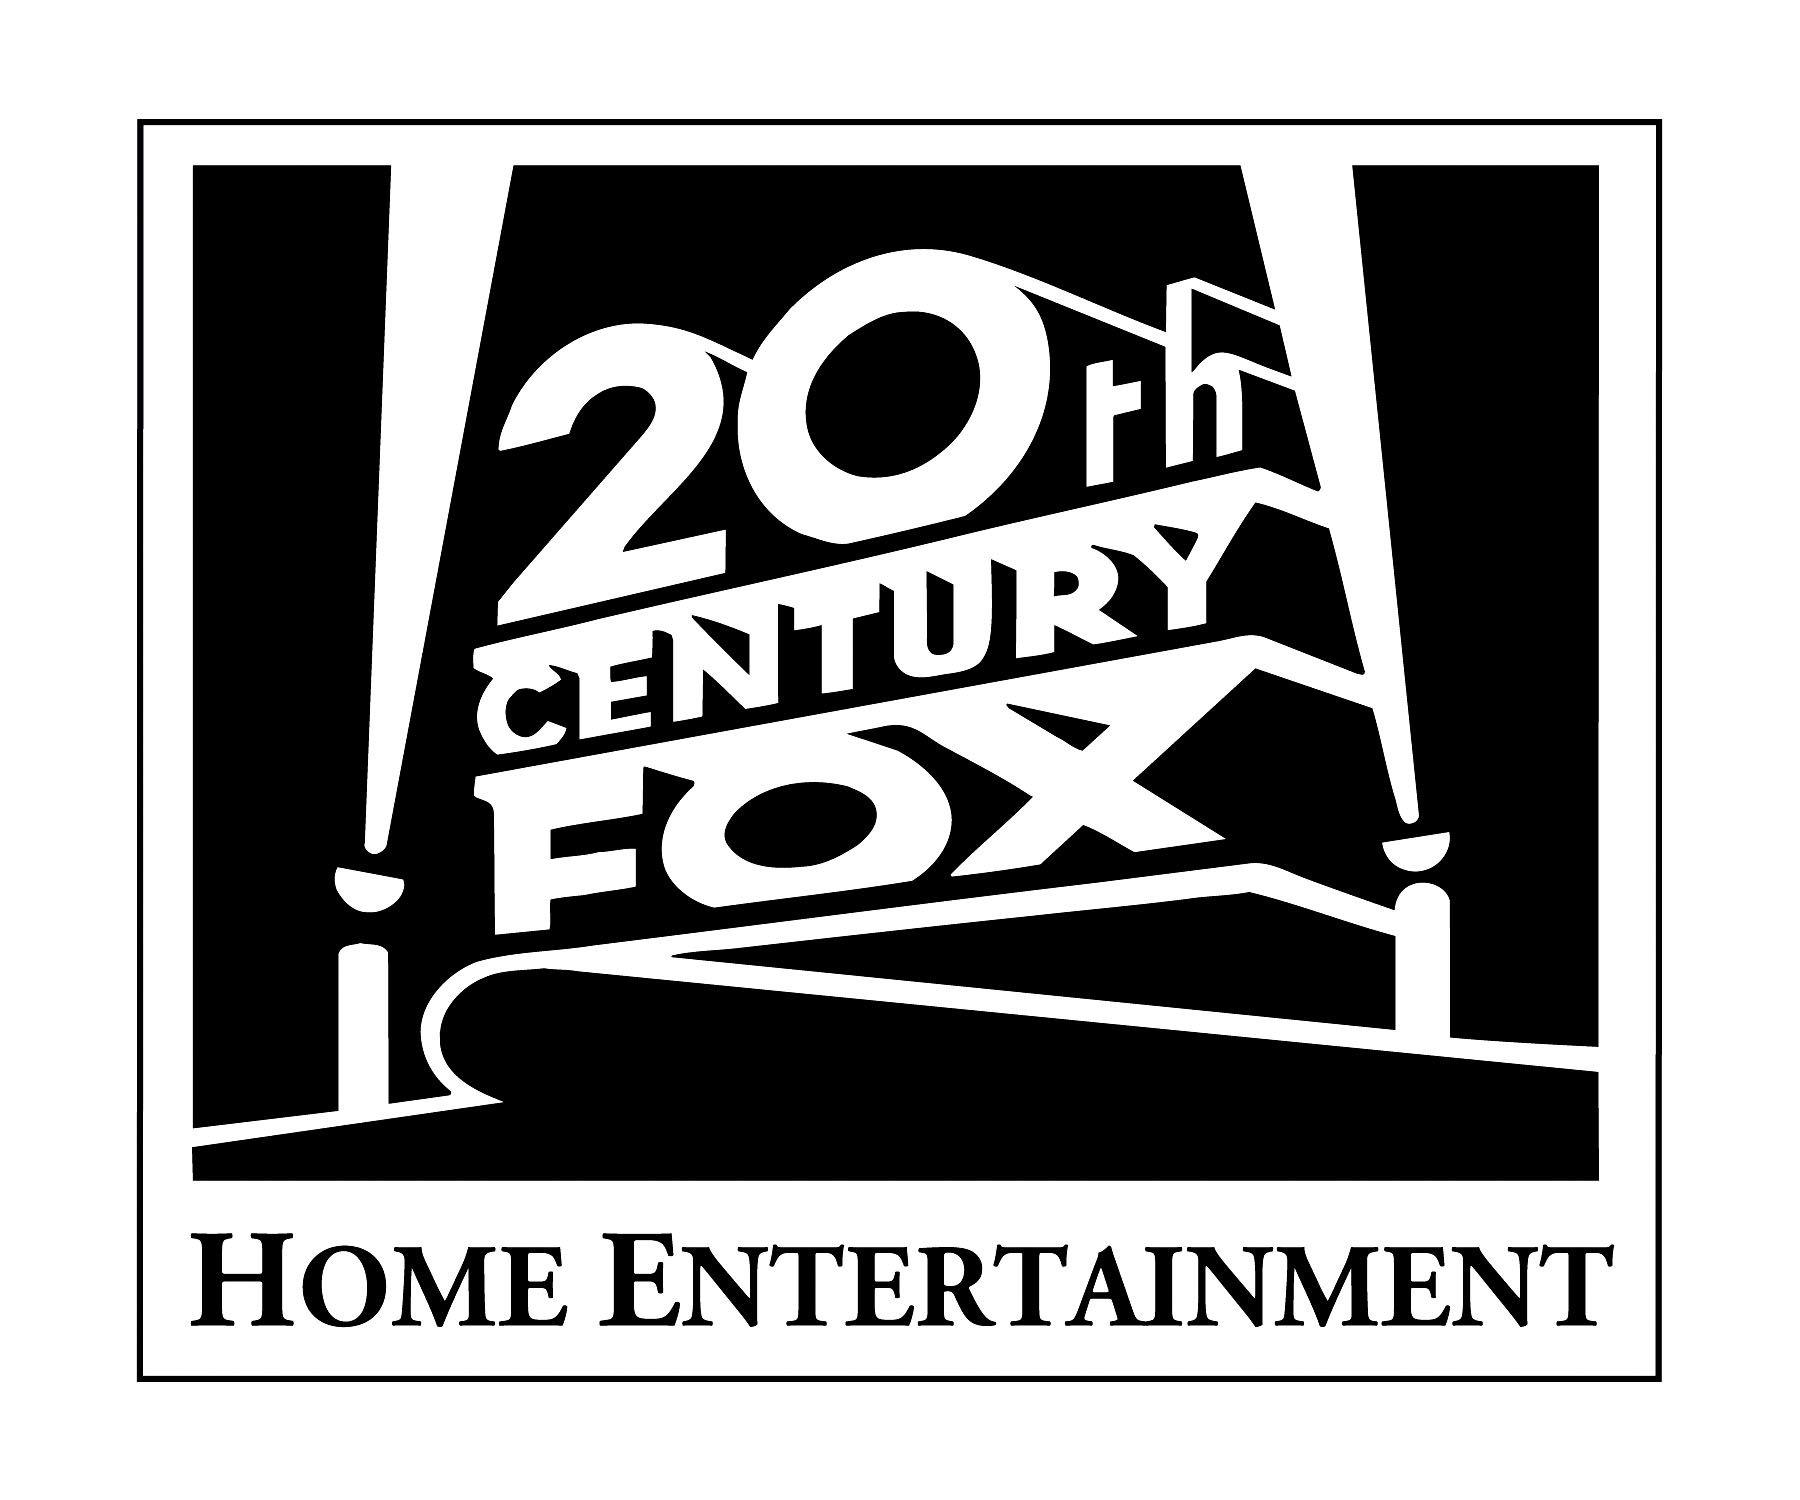 Home Entertainment Logo - Twentieth Century Fox Film Corporation images 20th Century Fox Home ...